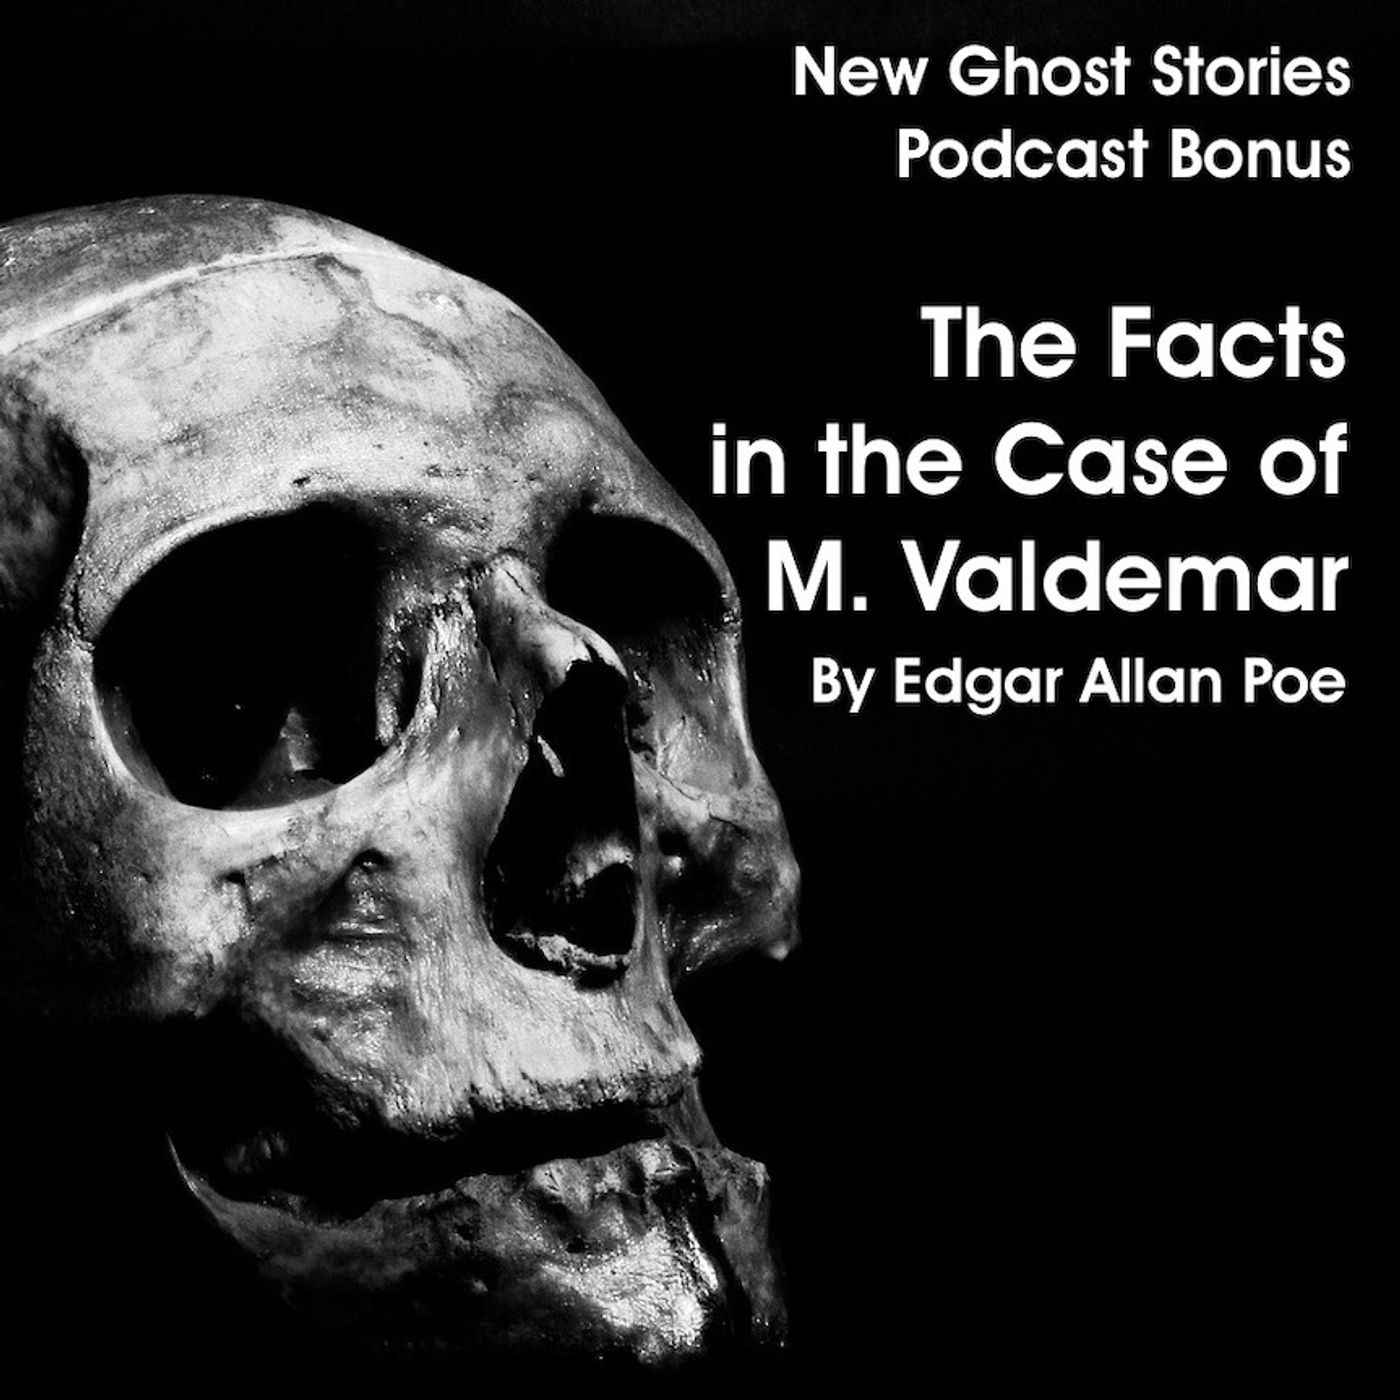 The Facts in the Case of M. Valdemar by Edgar Allan Poe (Bonus 9)